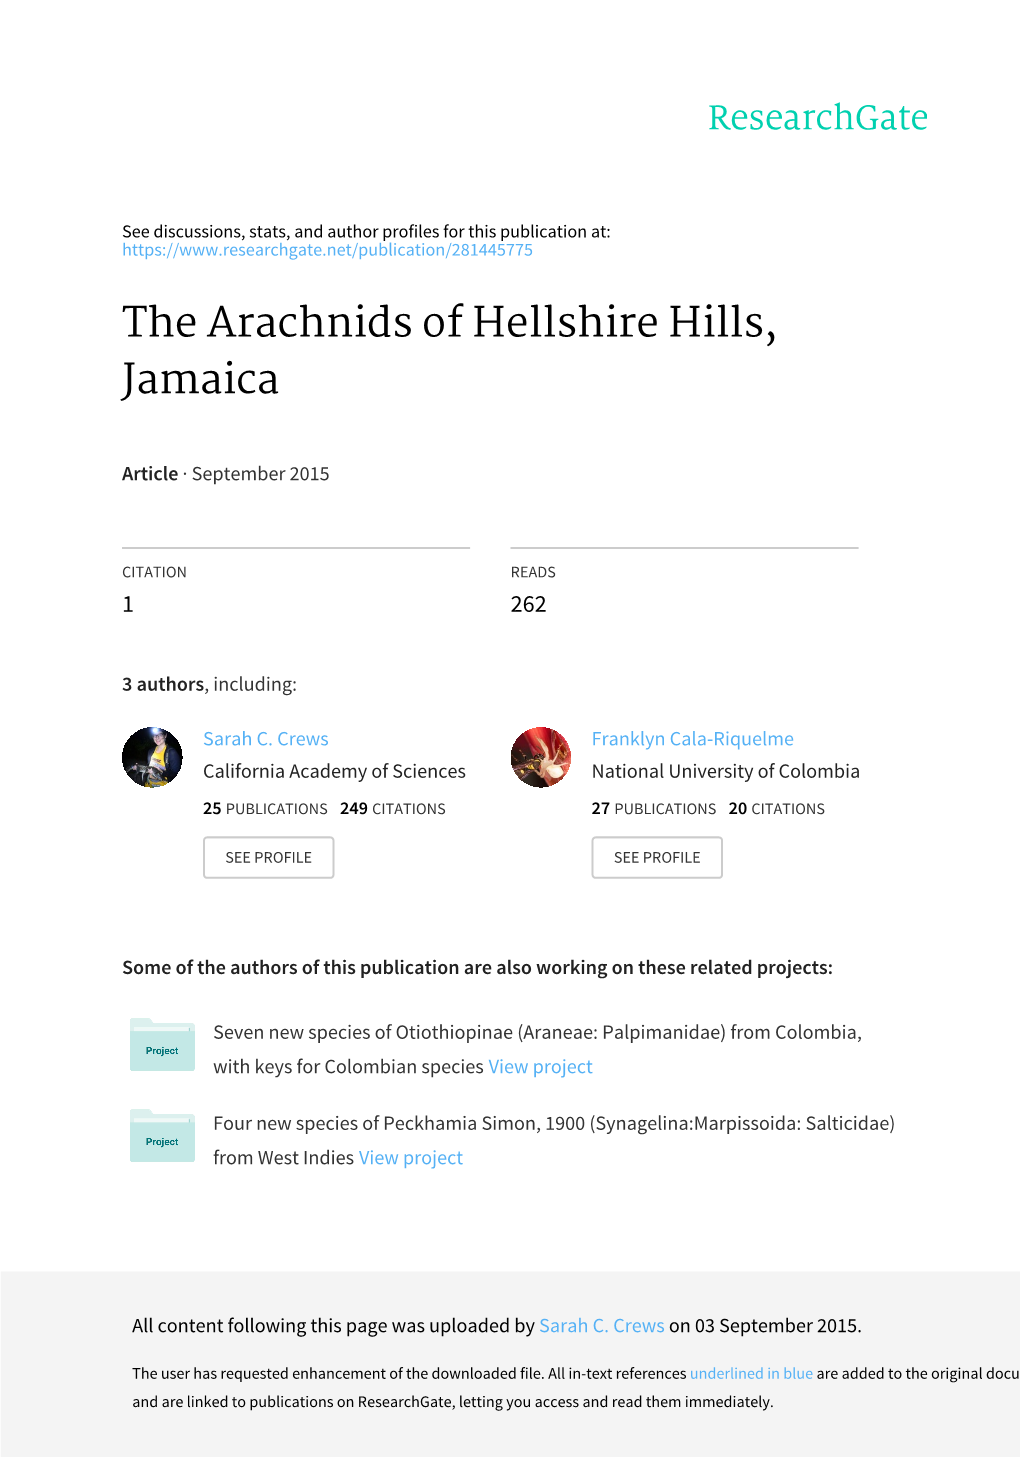 The Arachnids of Hellshire Hills, Jamaica